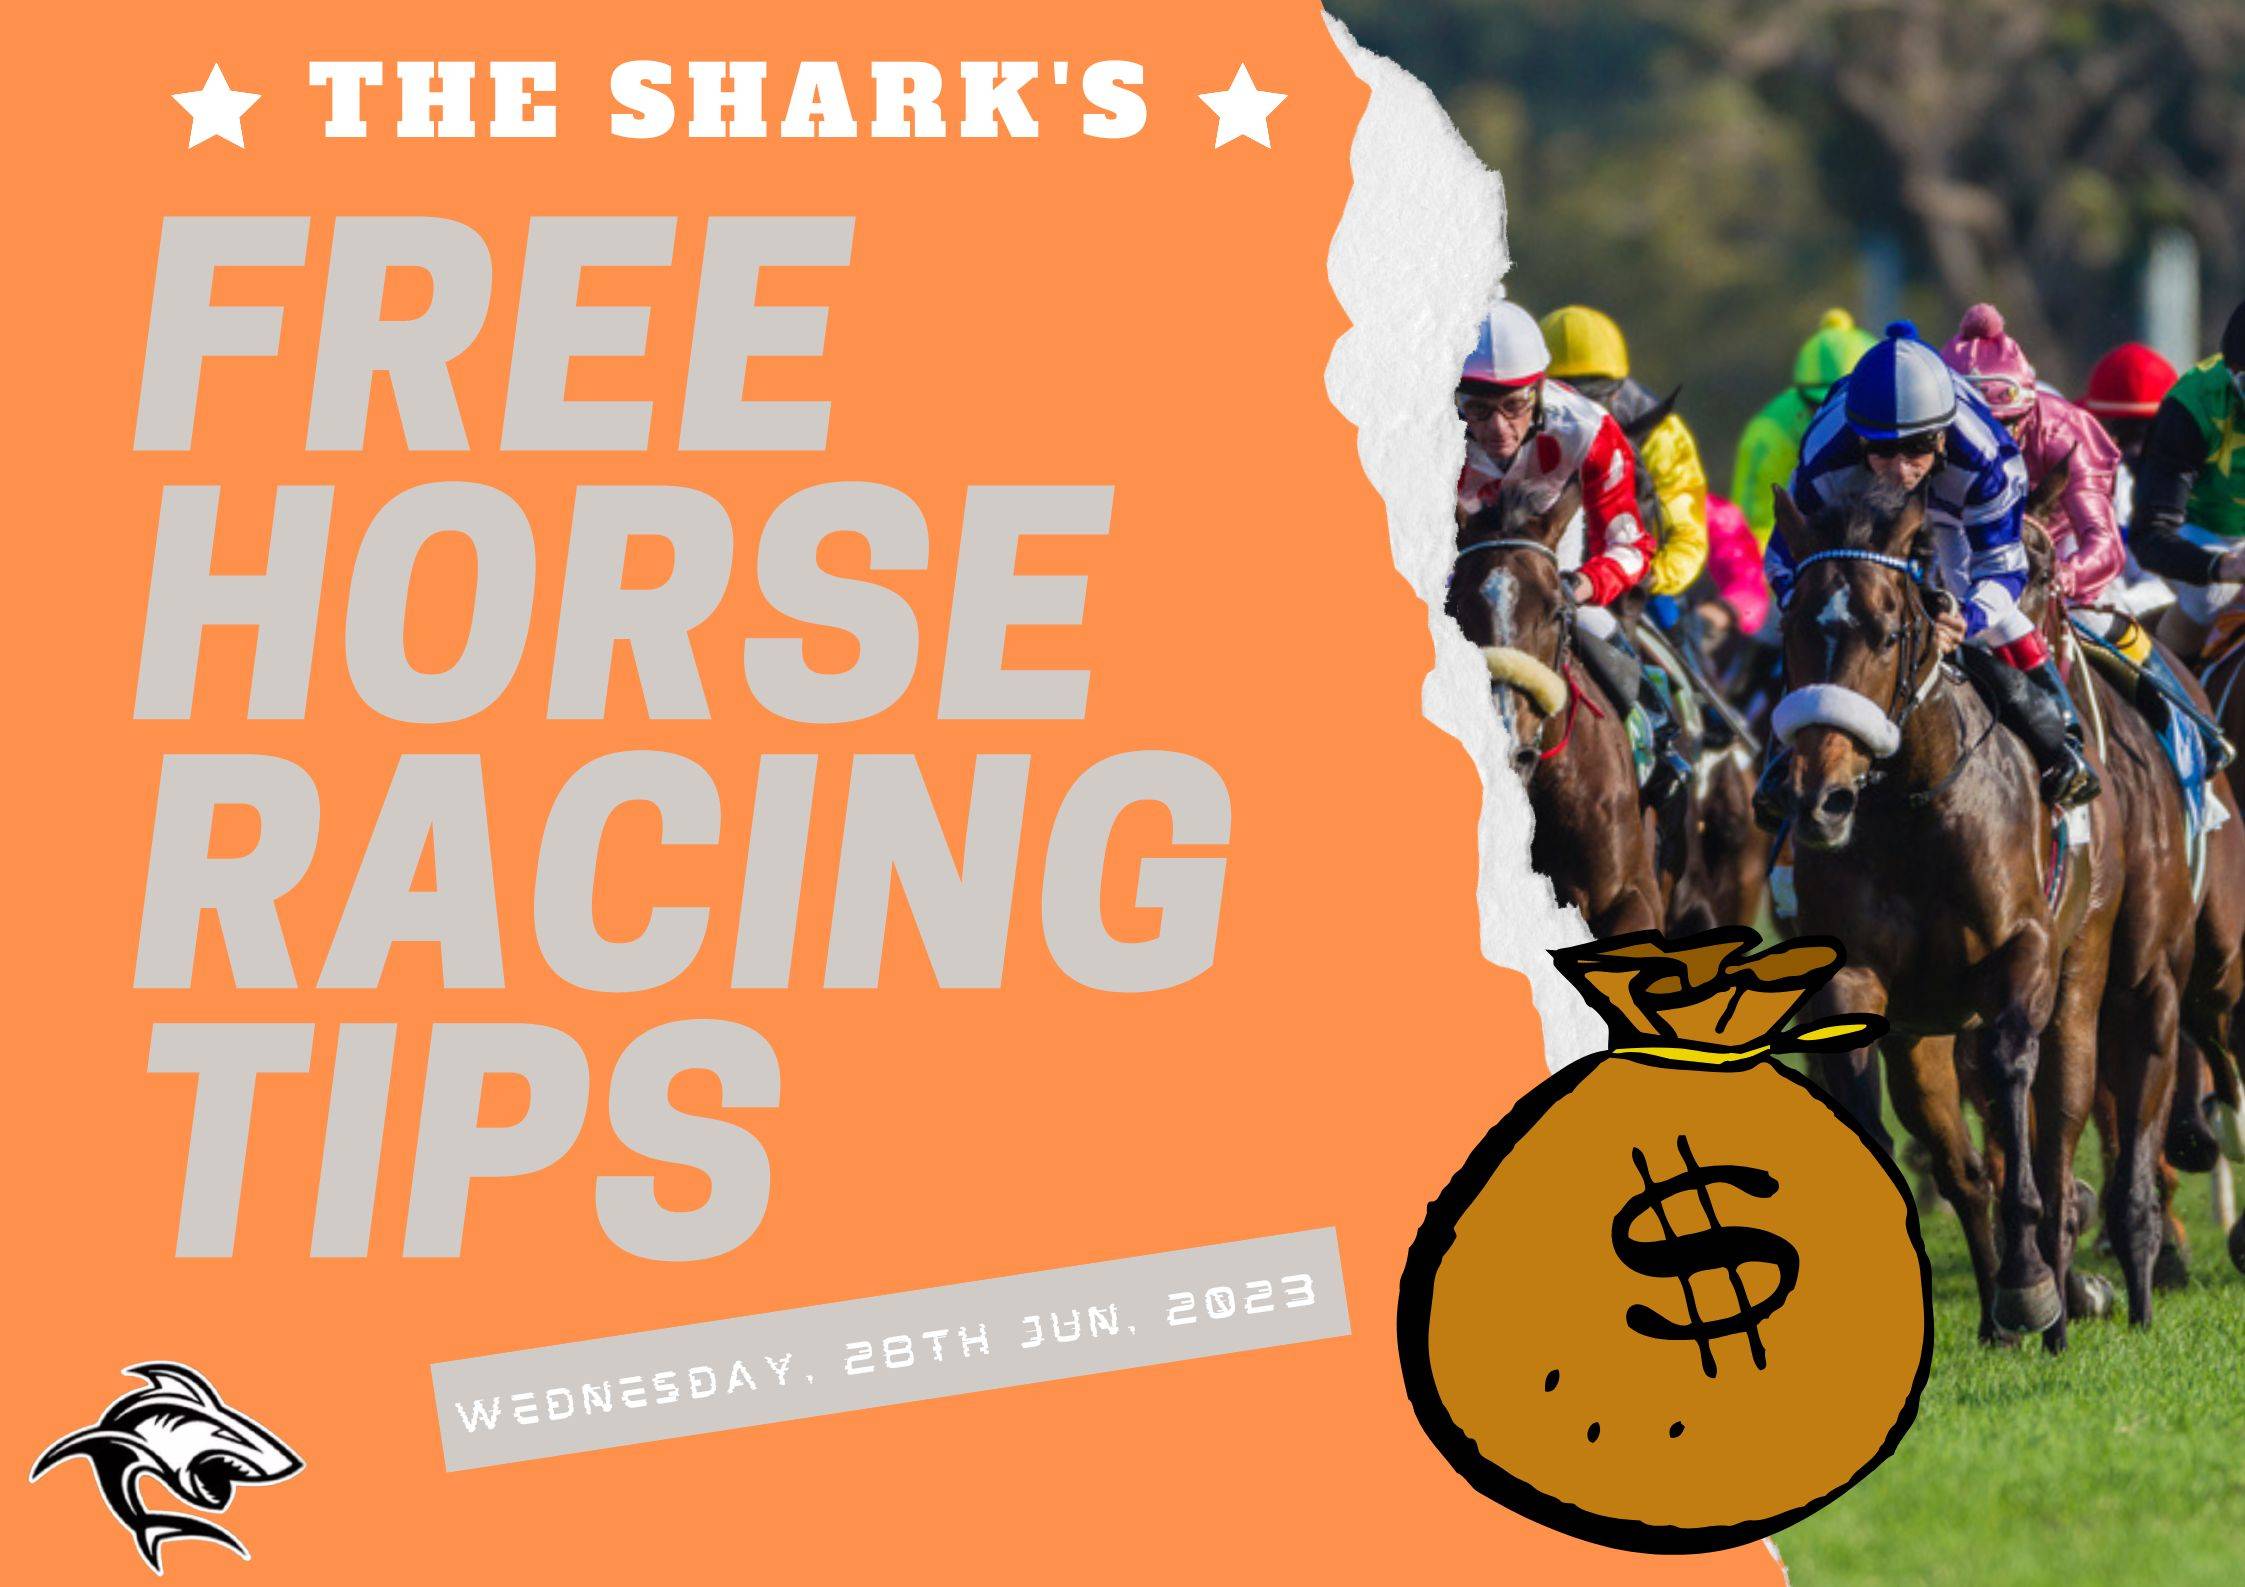 Free Horse Racing Tips - 28th Jun